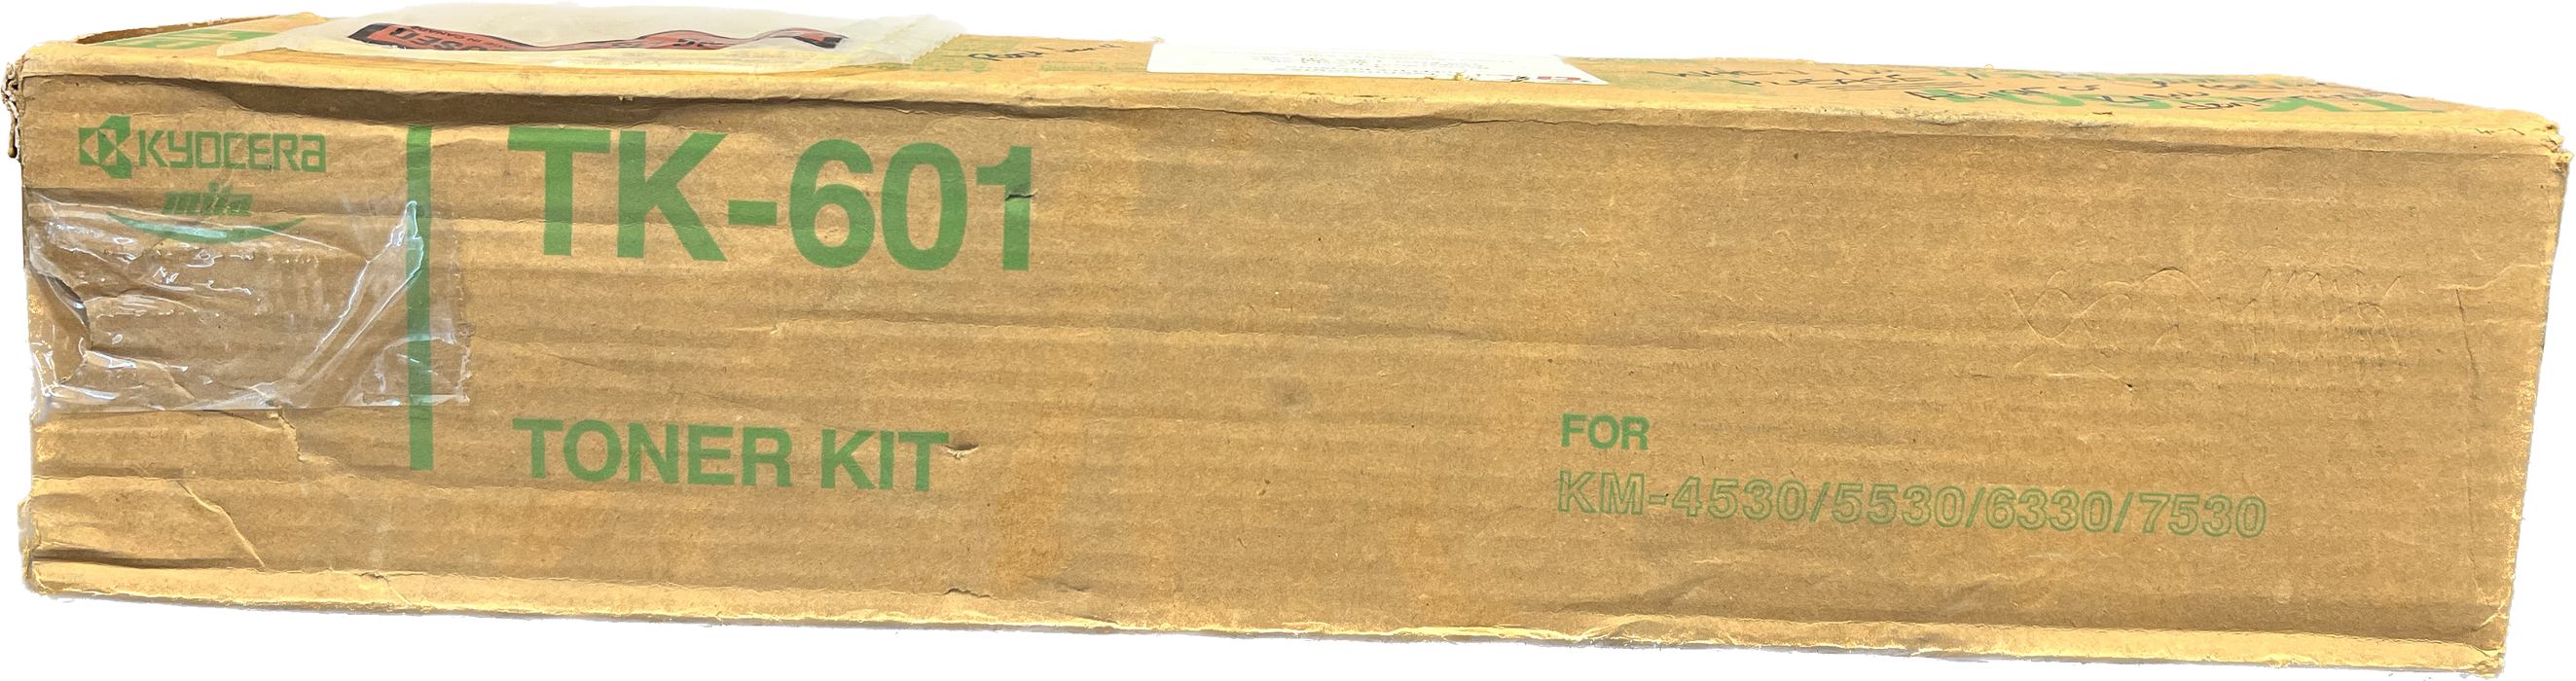 Genuine Kyocera Black Toner Cartridge | TK-601